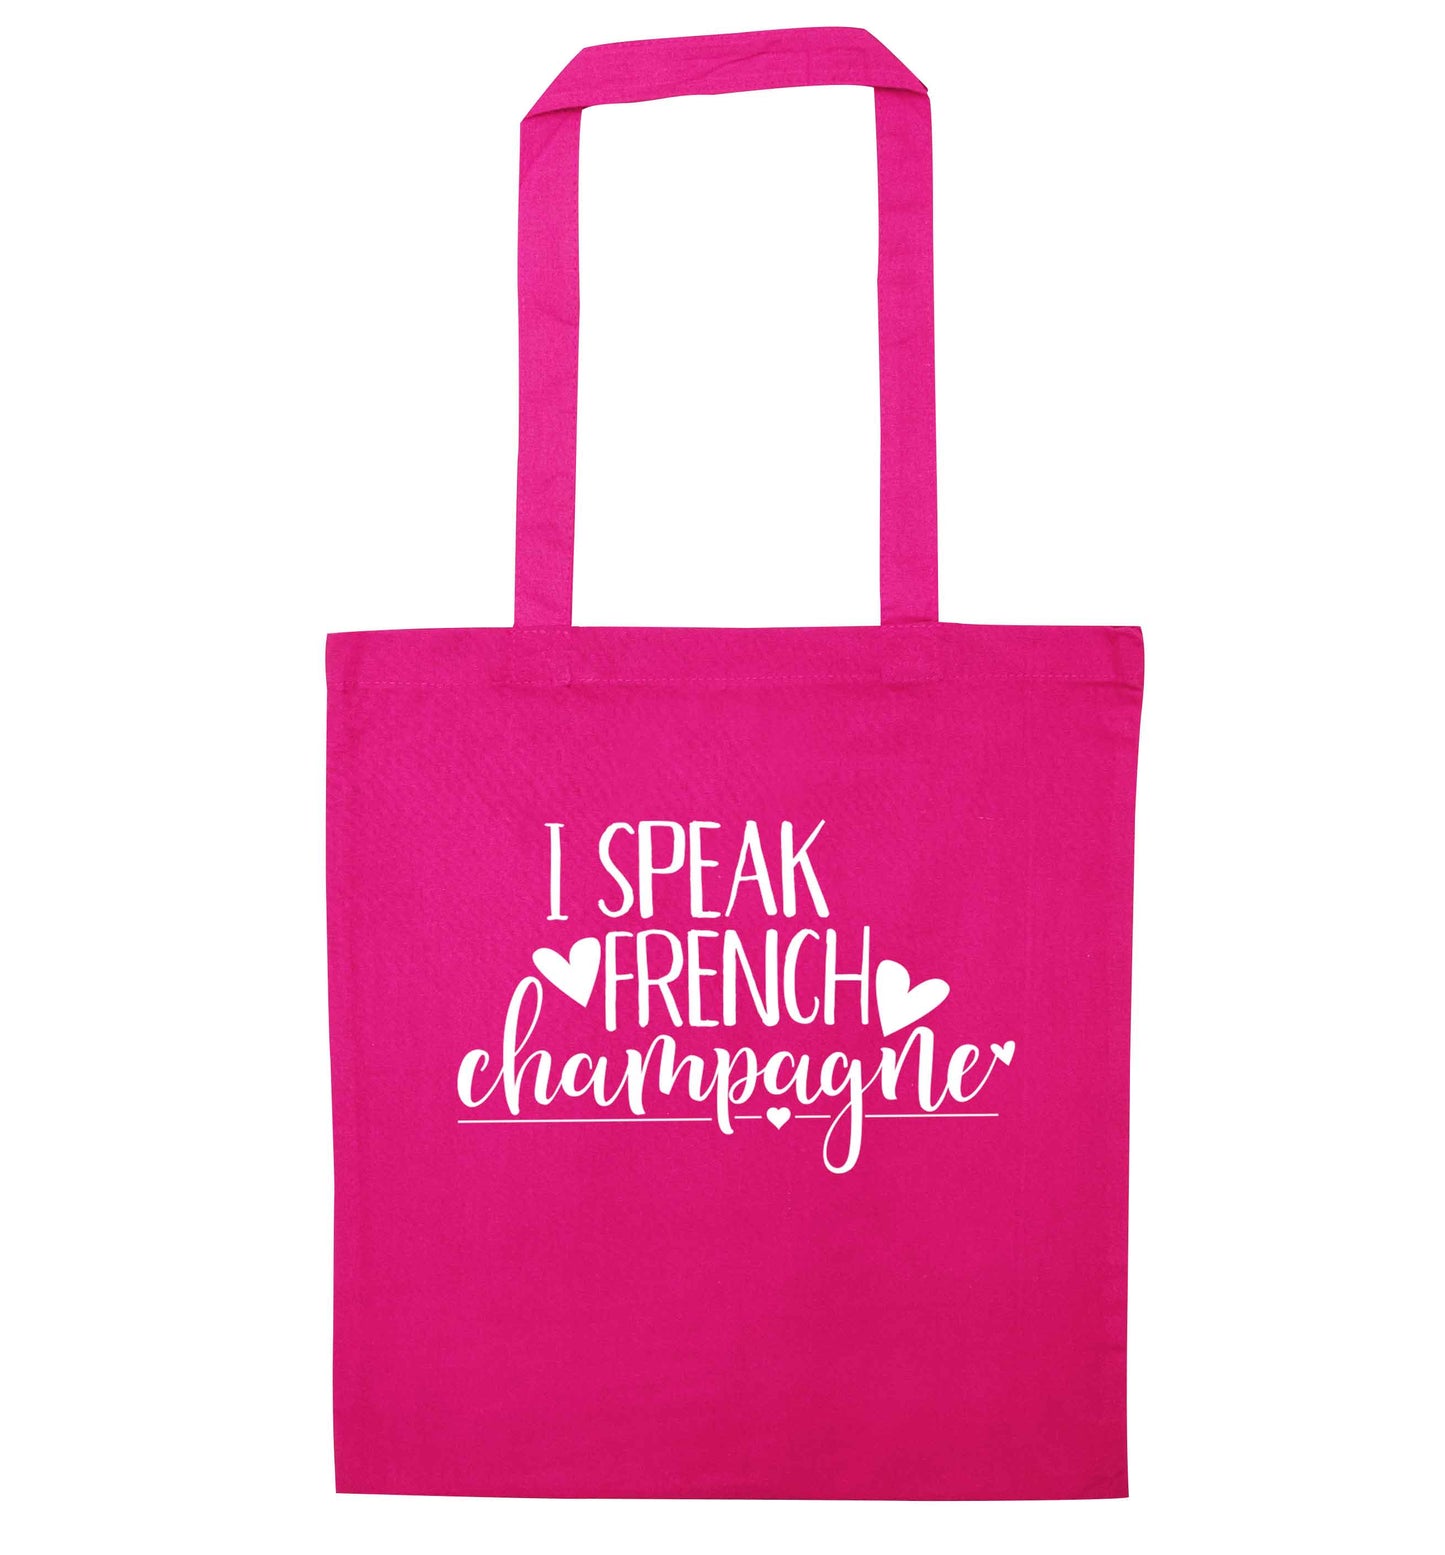 I speak french champagne pink tote bag